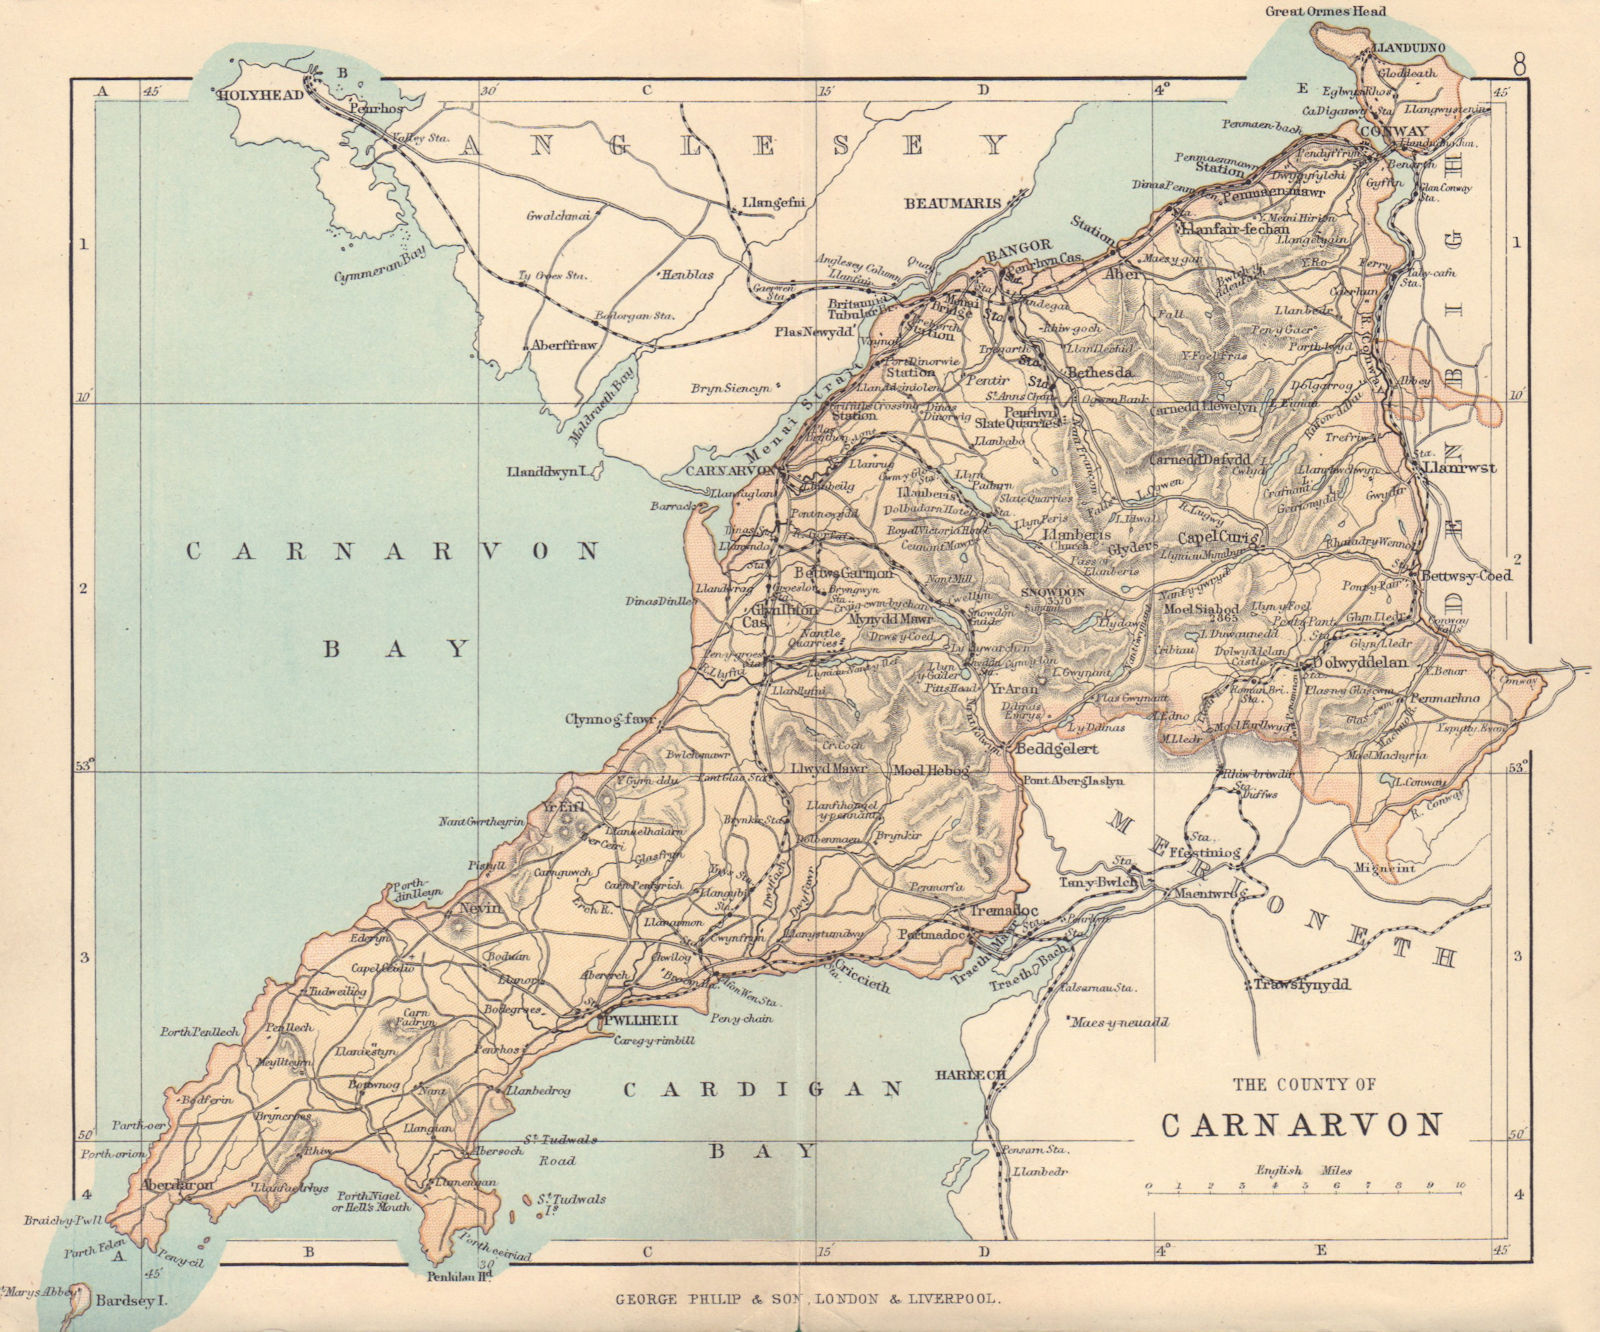 Associate Product CAERNARFONSHIRE "County of Carnarvon" Bangor Conwy Wales BARTHOLOMEW 1890 map